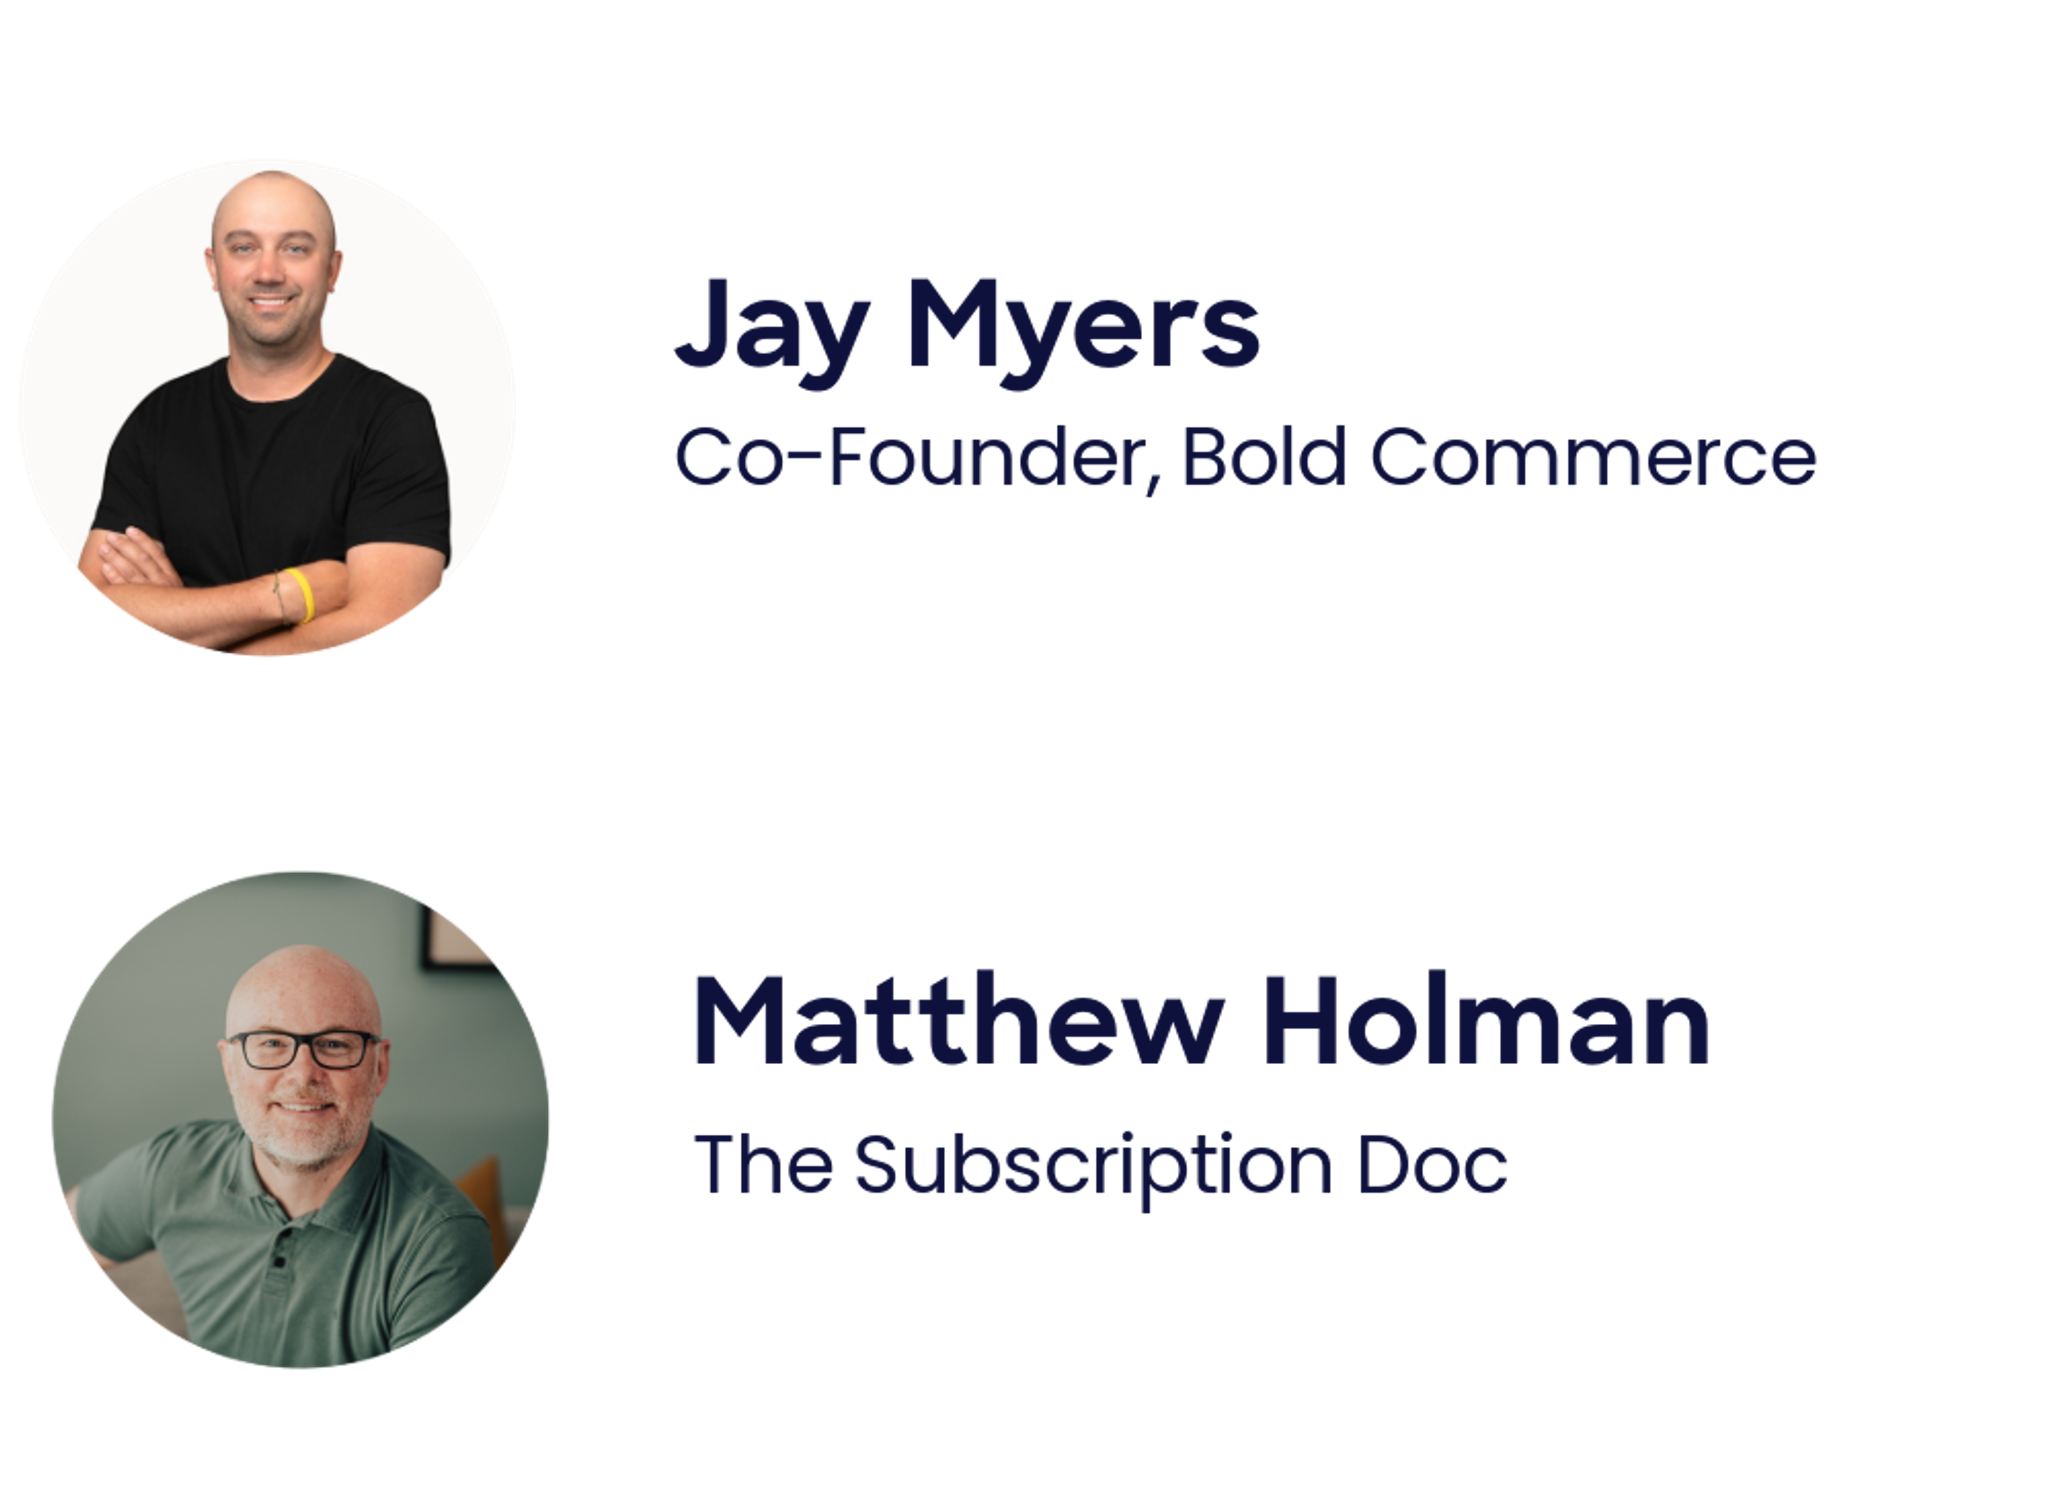 Jay Myers and Matthew Holman